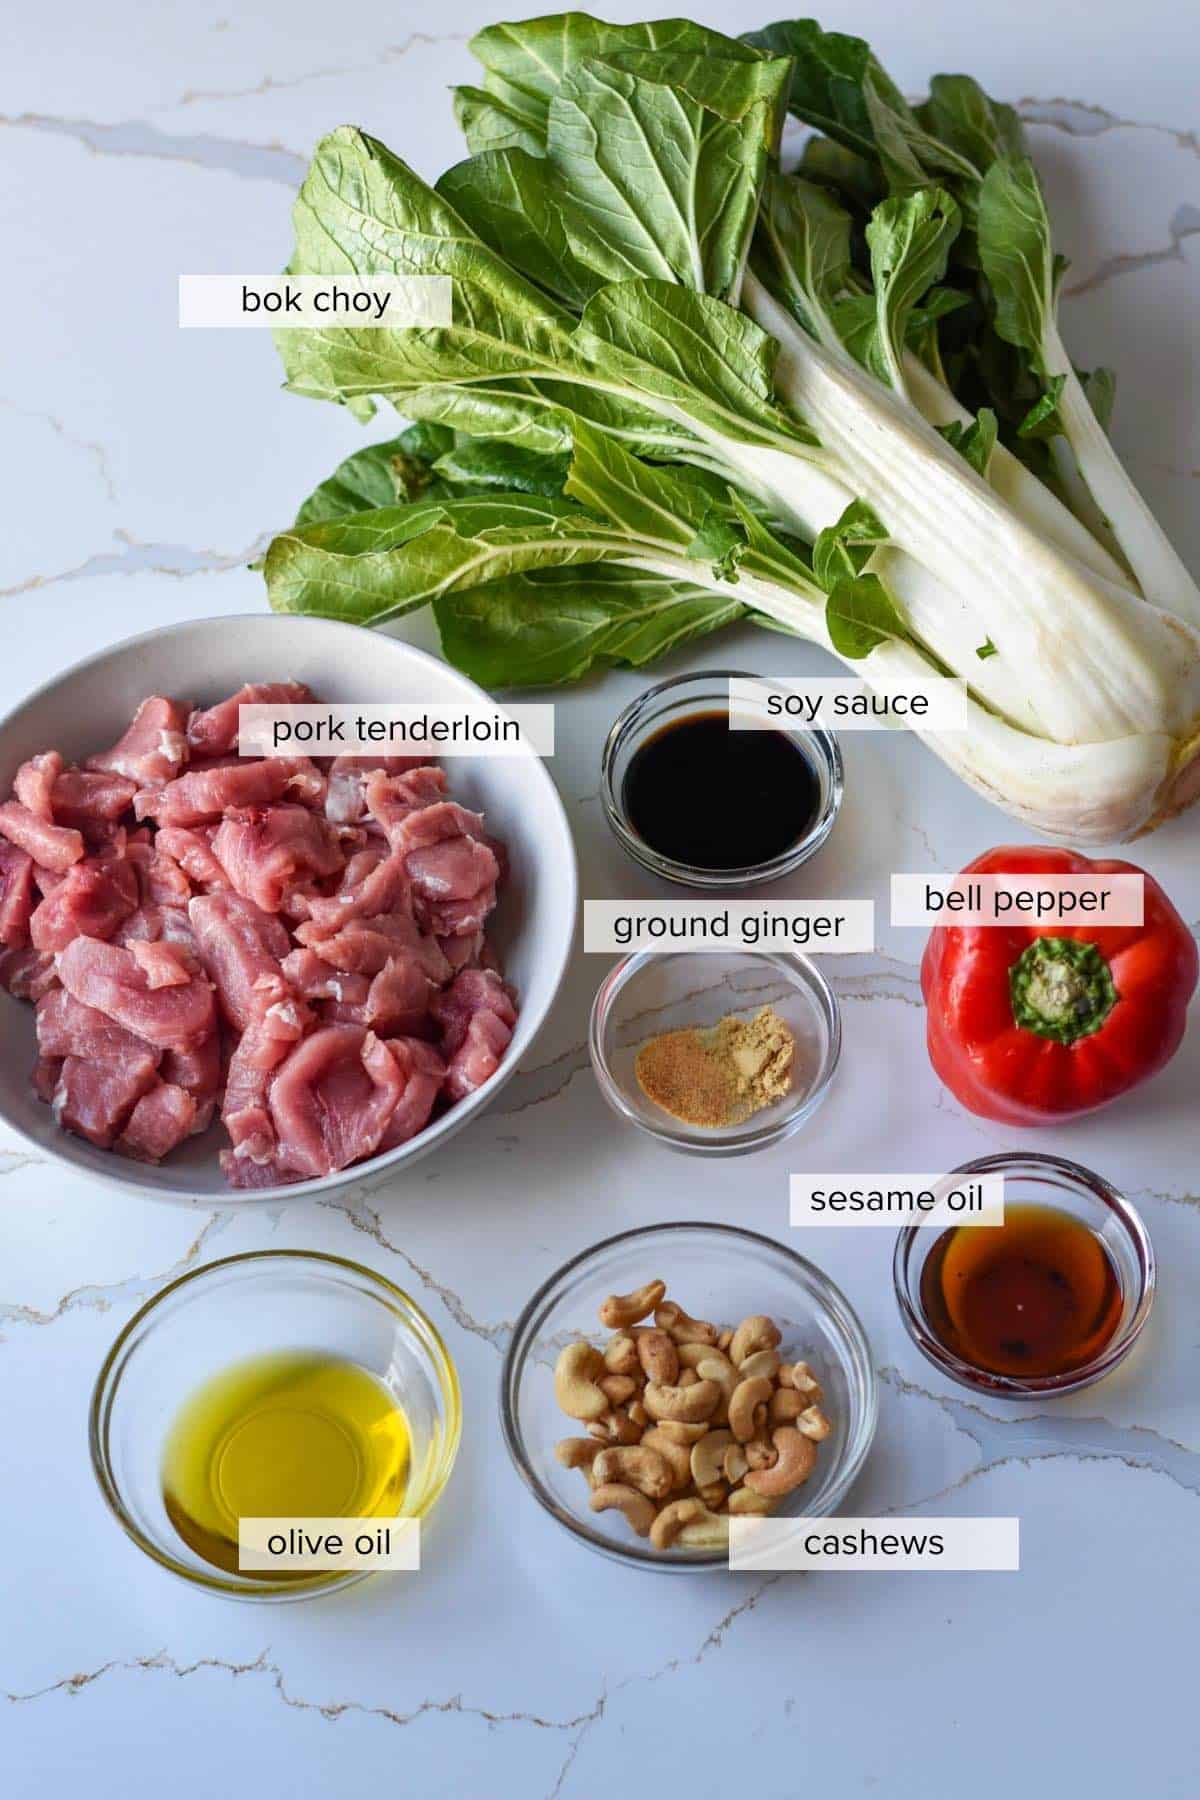 Ingredients including pork tenderloin, bok choy, red bell pepper, soy sauce, sesame oil, cashews, ground ginger and olive oil.